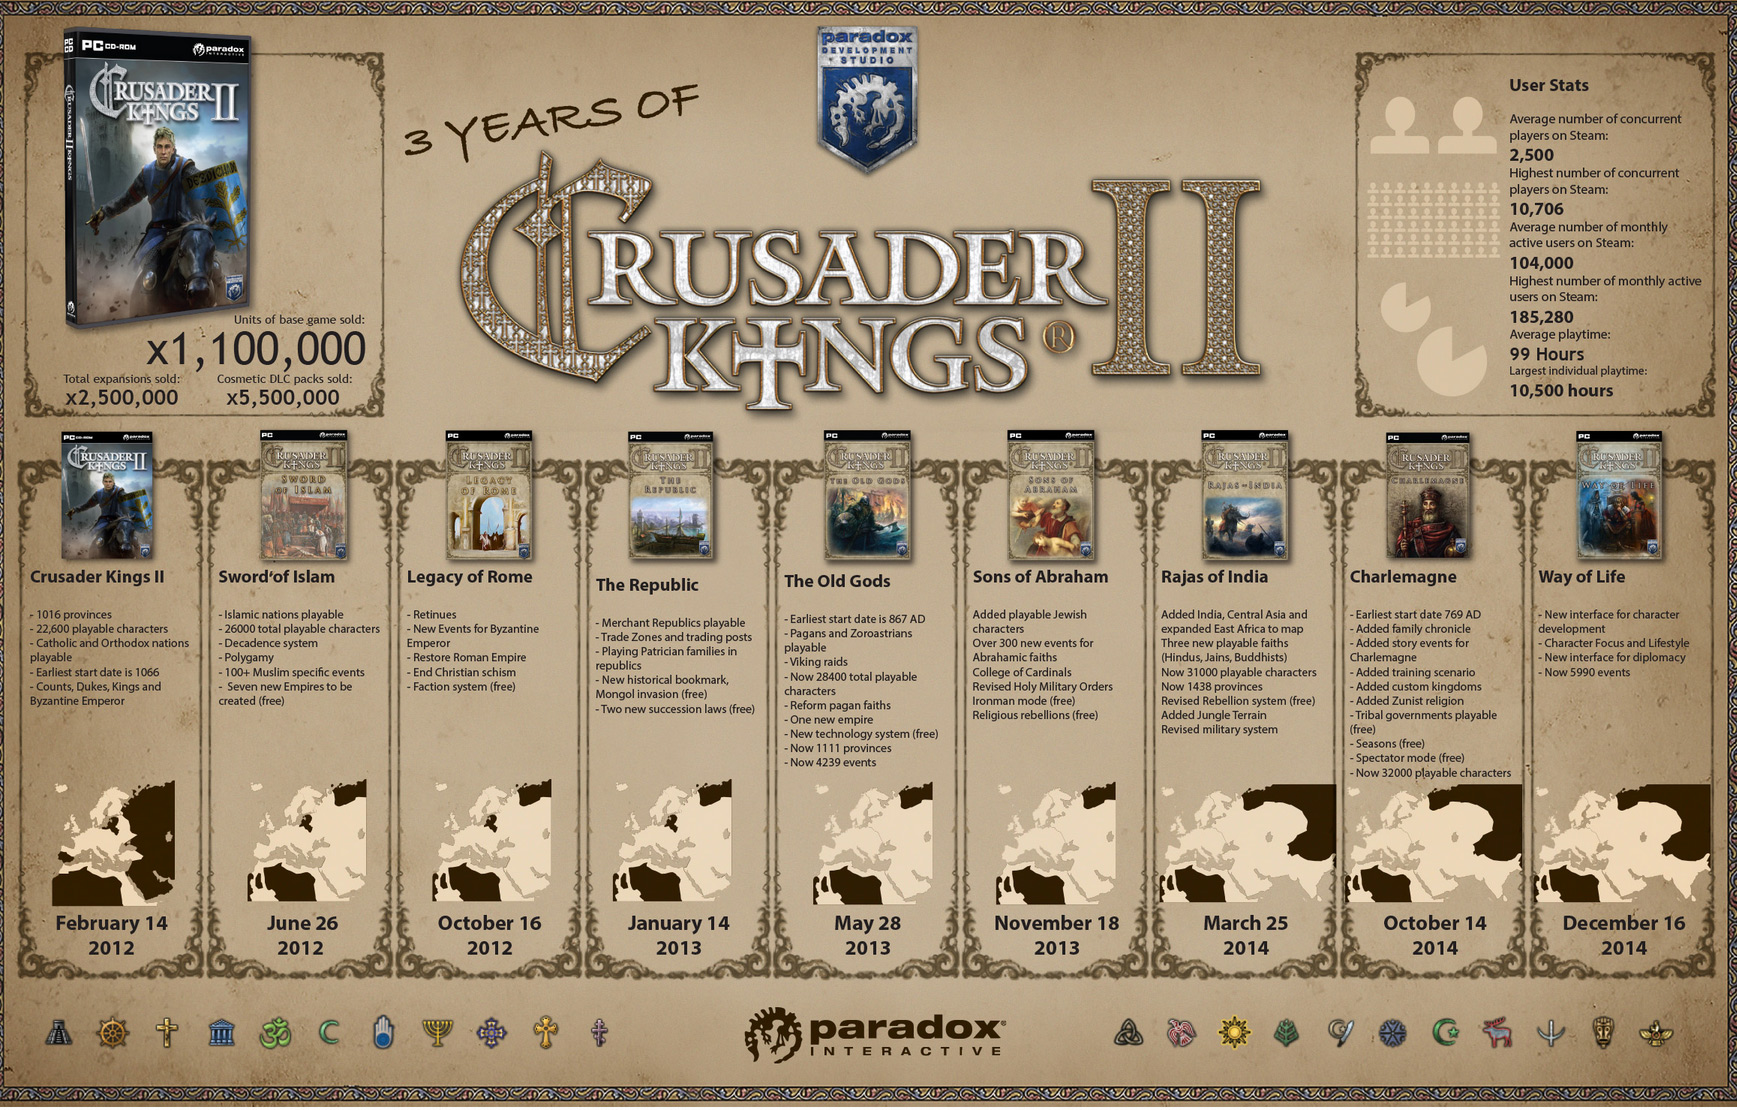 Crusader kings 3 esrb